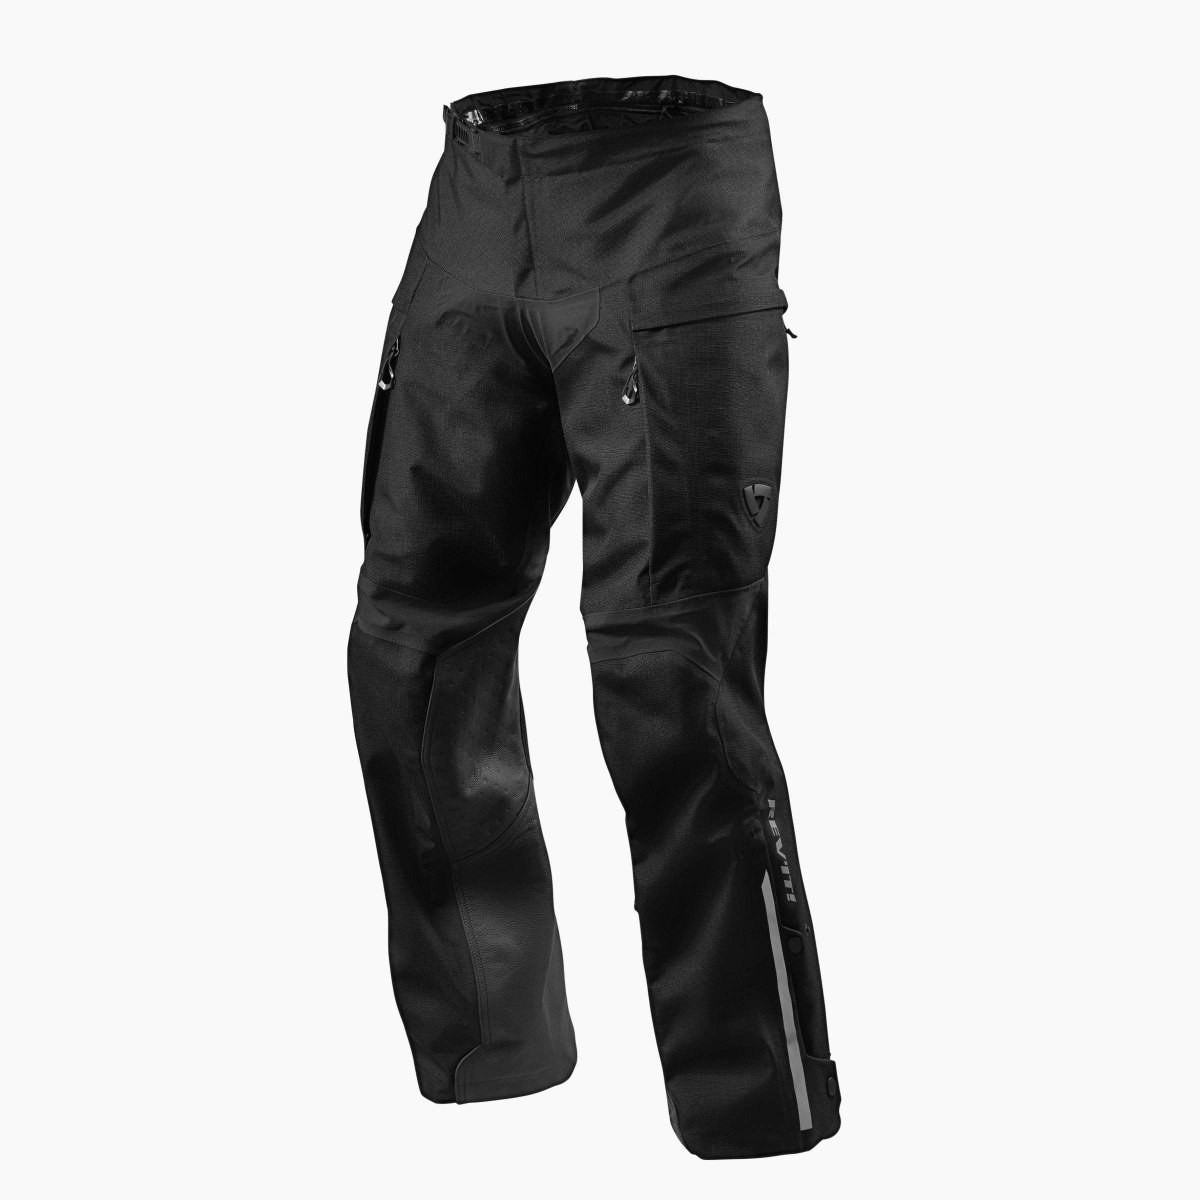 Image of REV'IT! Component H2O Short Black Motorcycle Pants Talla M